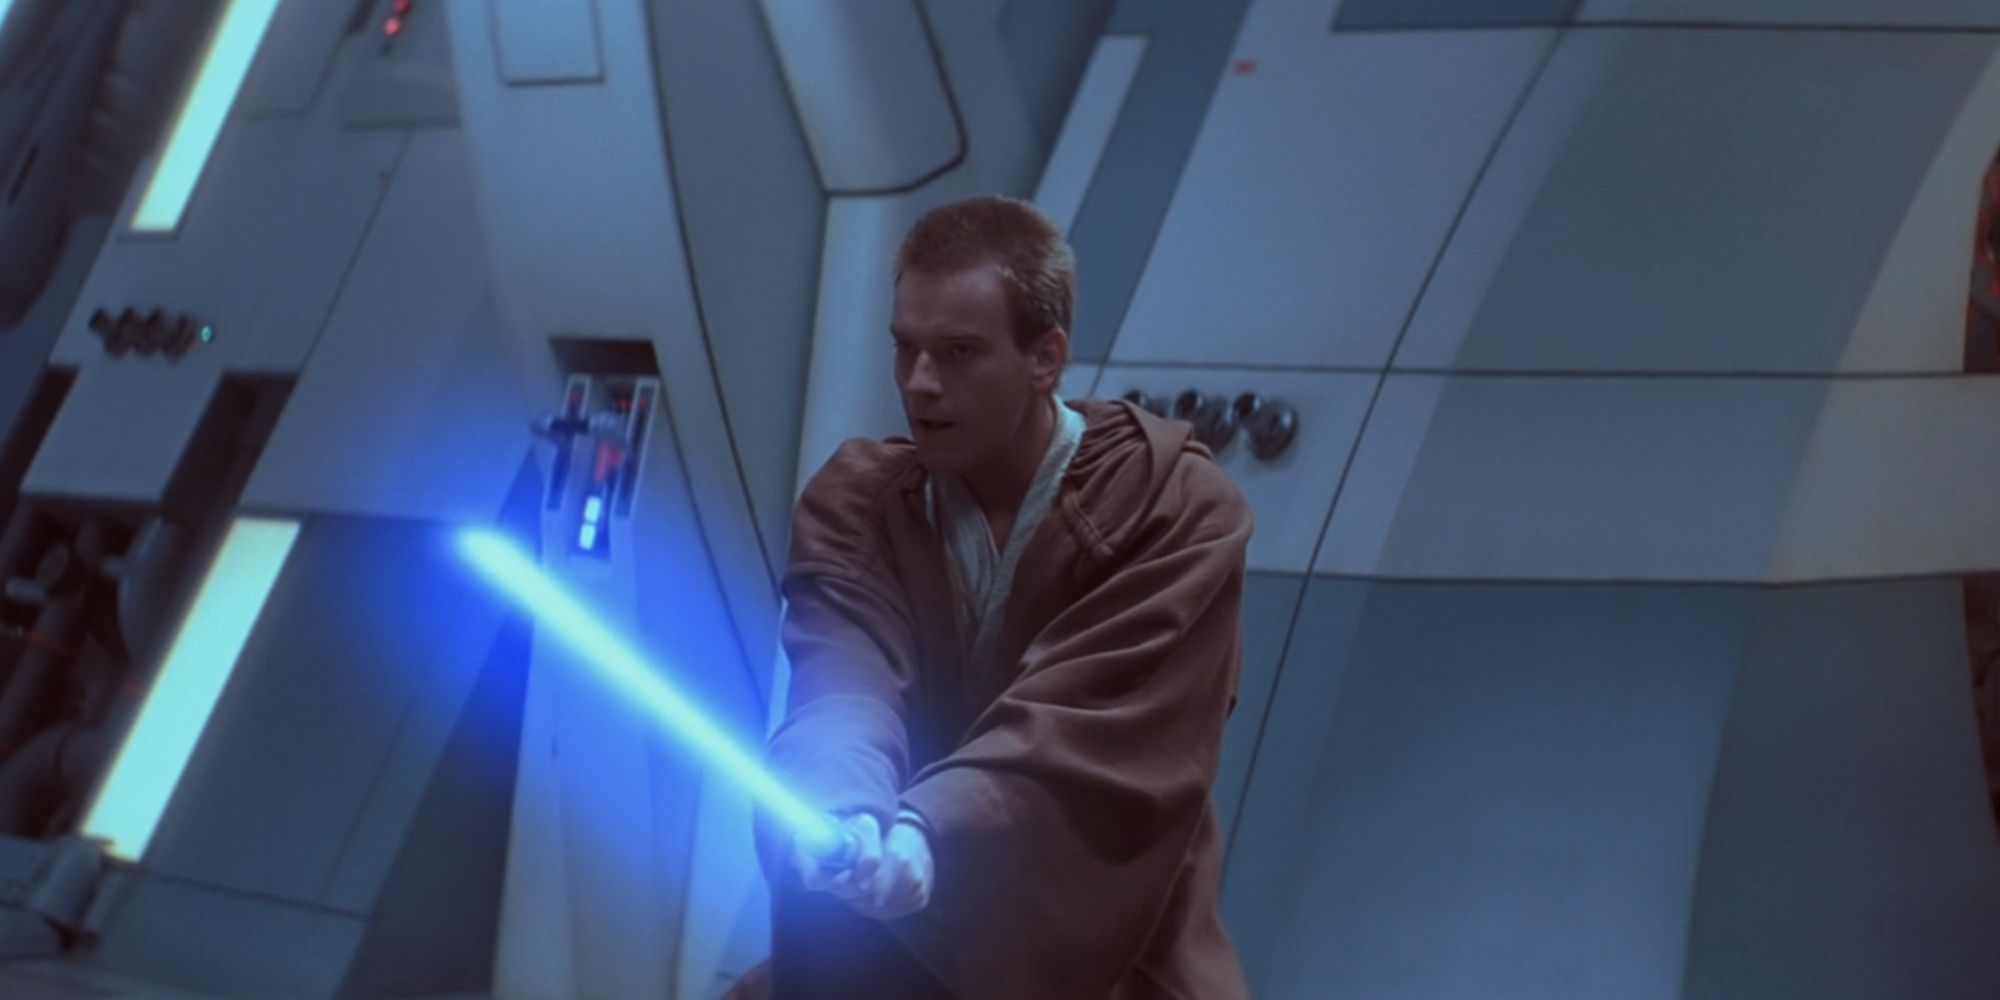 Obi-Wan Kenobi aboard a Lucrehulk wielding his lightsaber in Star Wars The Phantom Menace